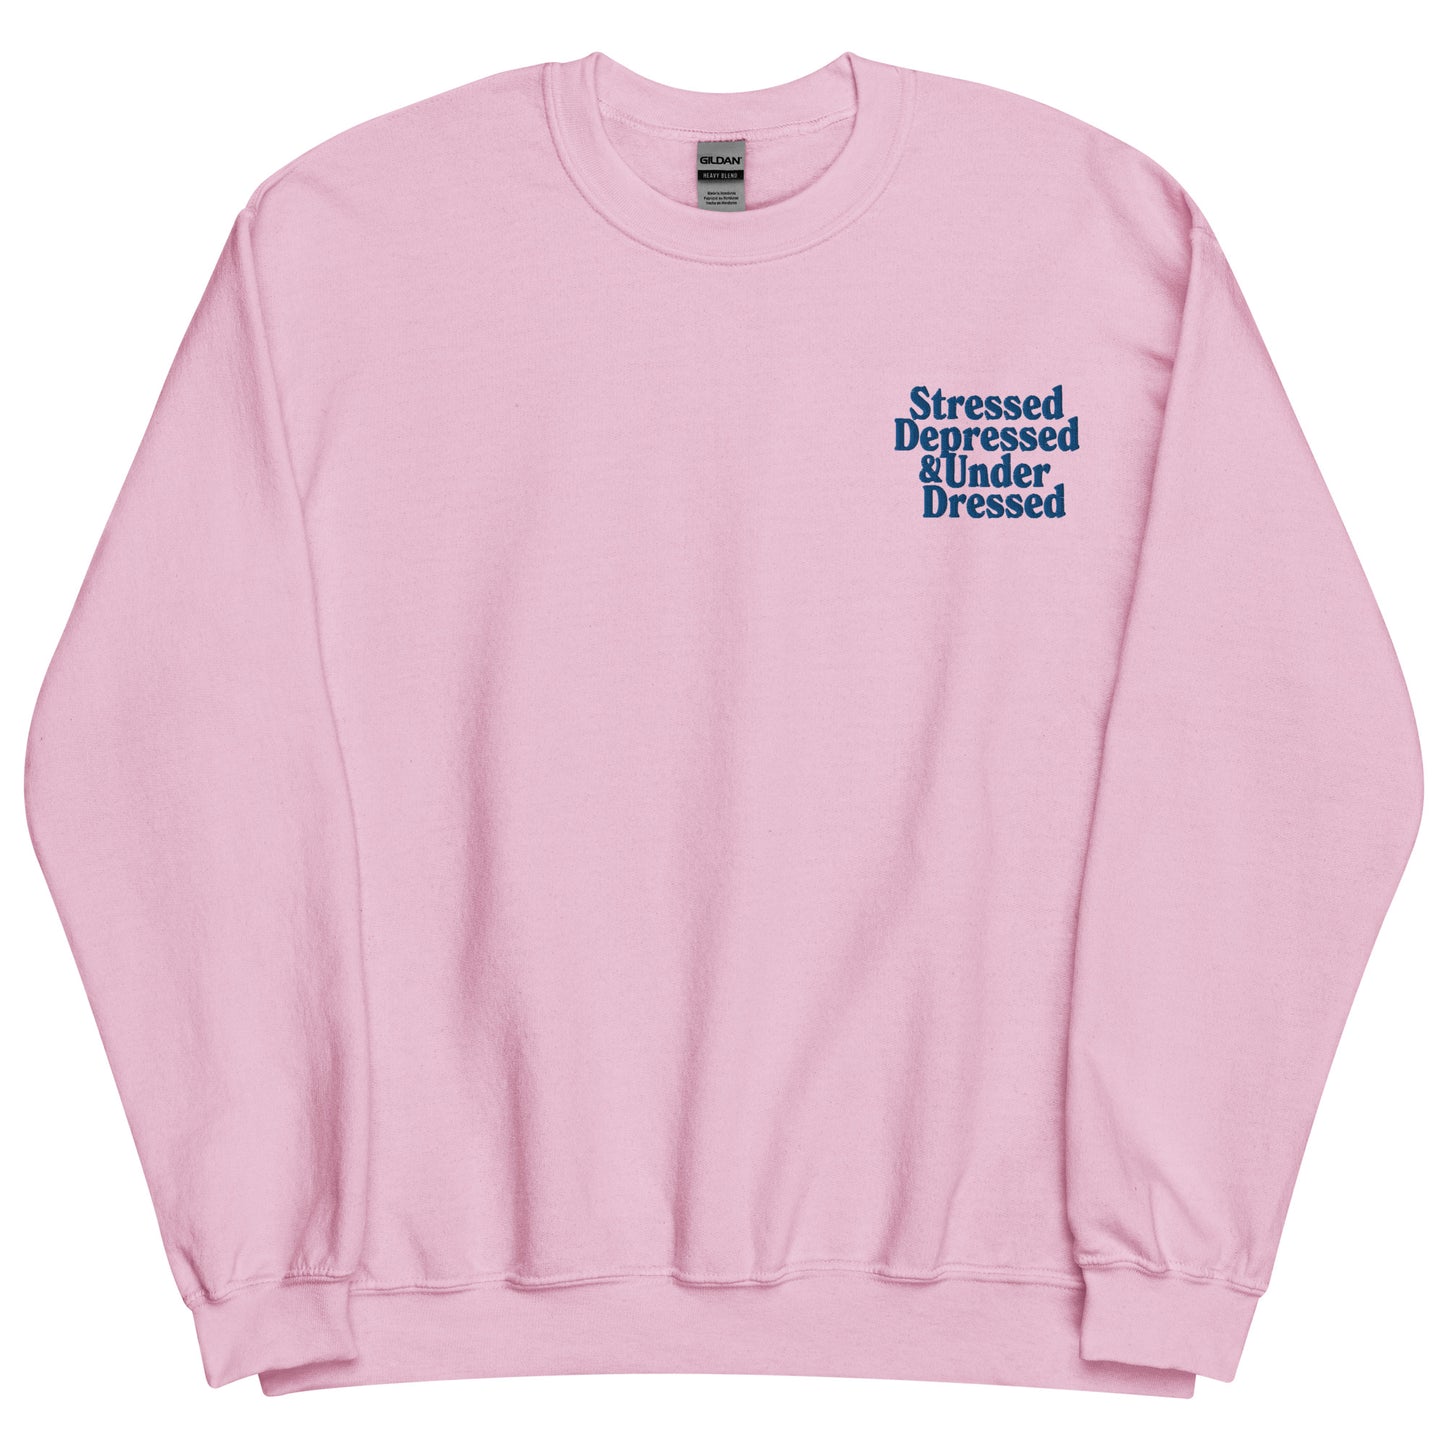 Stressed, Depressed & Underdressed - Embroidered Unisex Sweatshirt